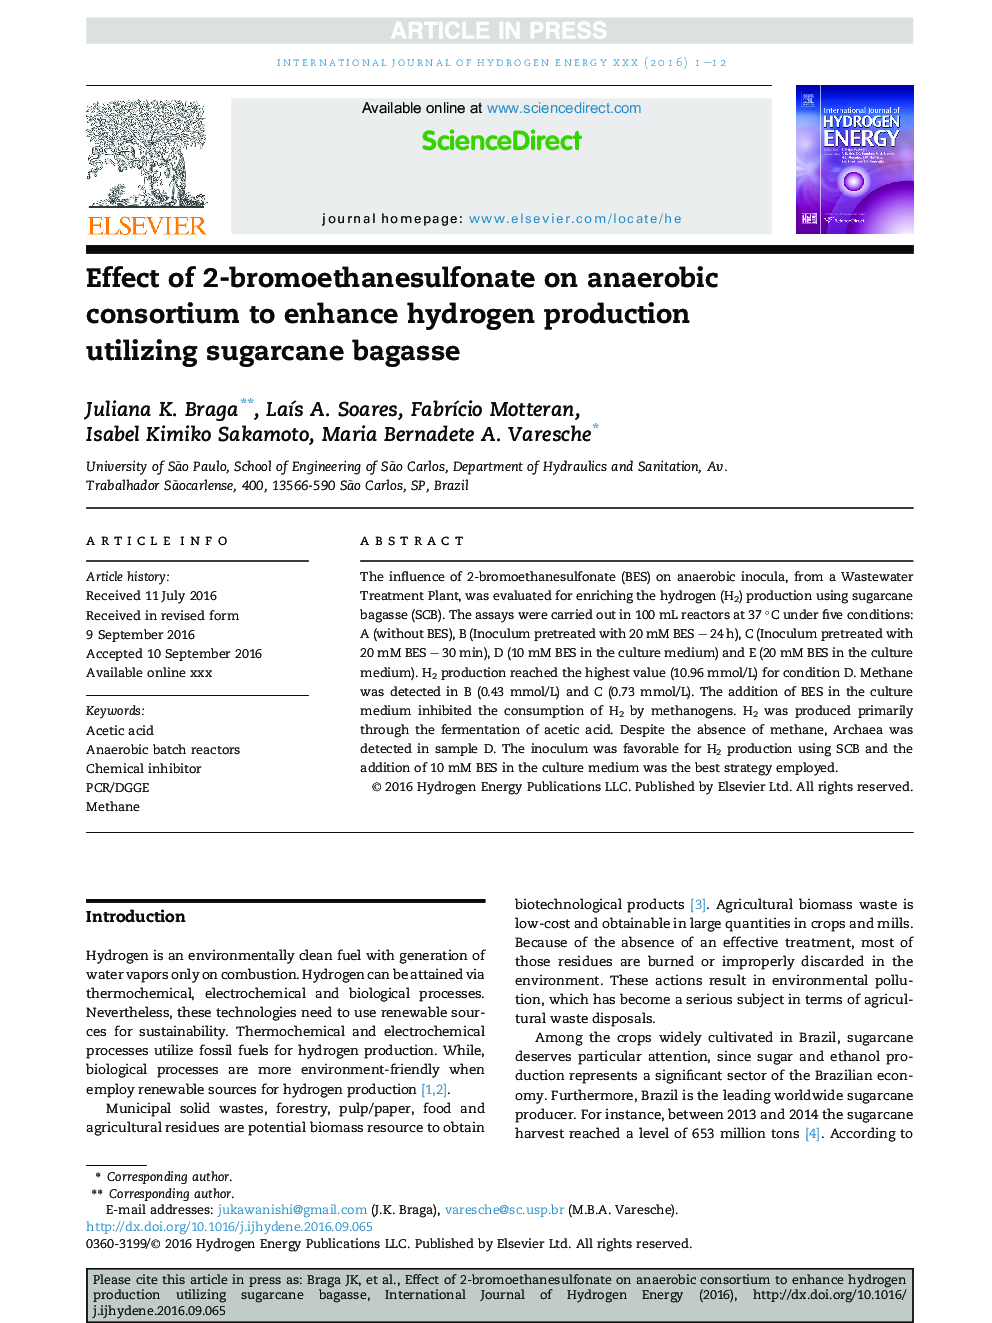 Effect of 2-bromoethanesulfonate on anaerobic consortium to enhance hydrogen production utilizing sugarcane bagasse